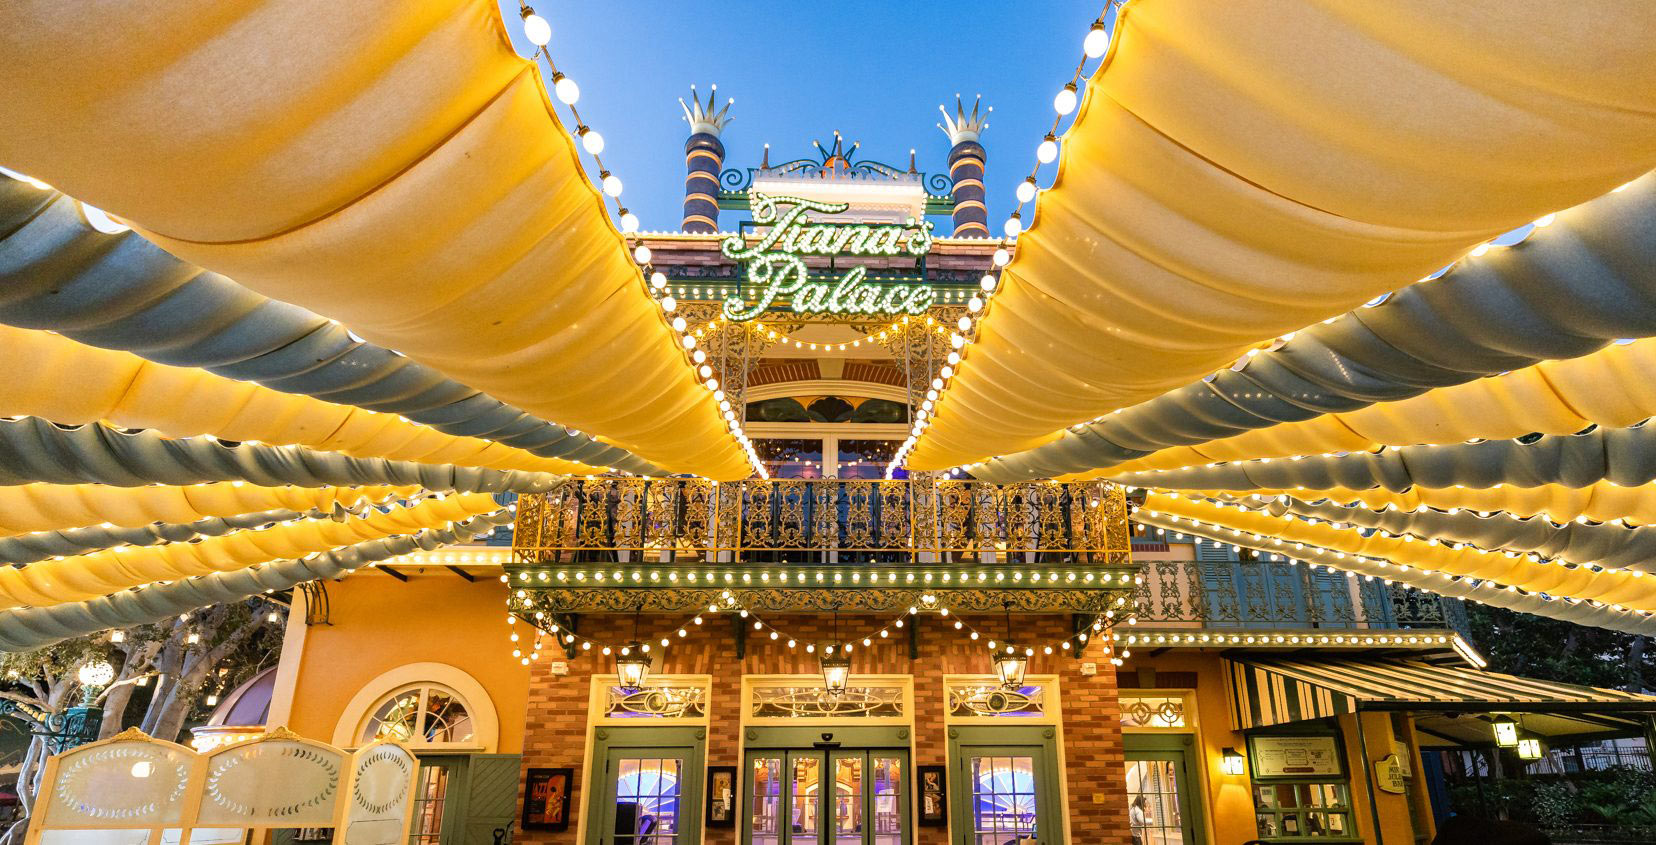 Tiana's Palace restaurant at Disneyland Park. 
